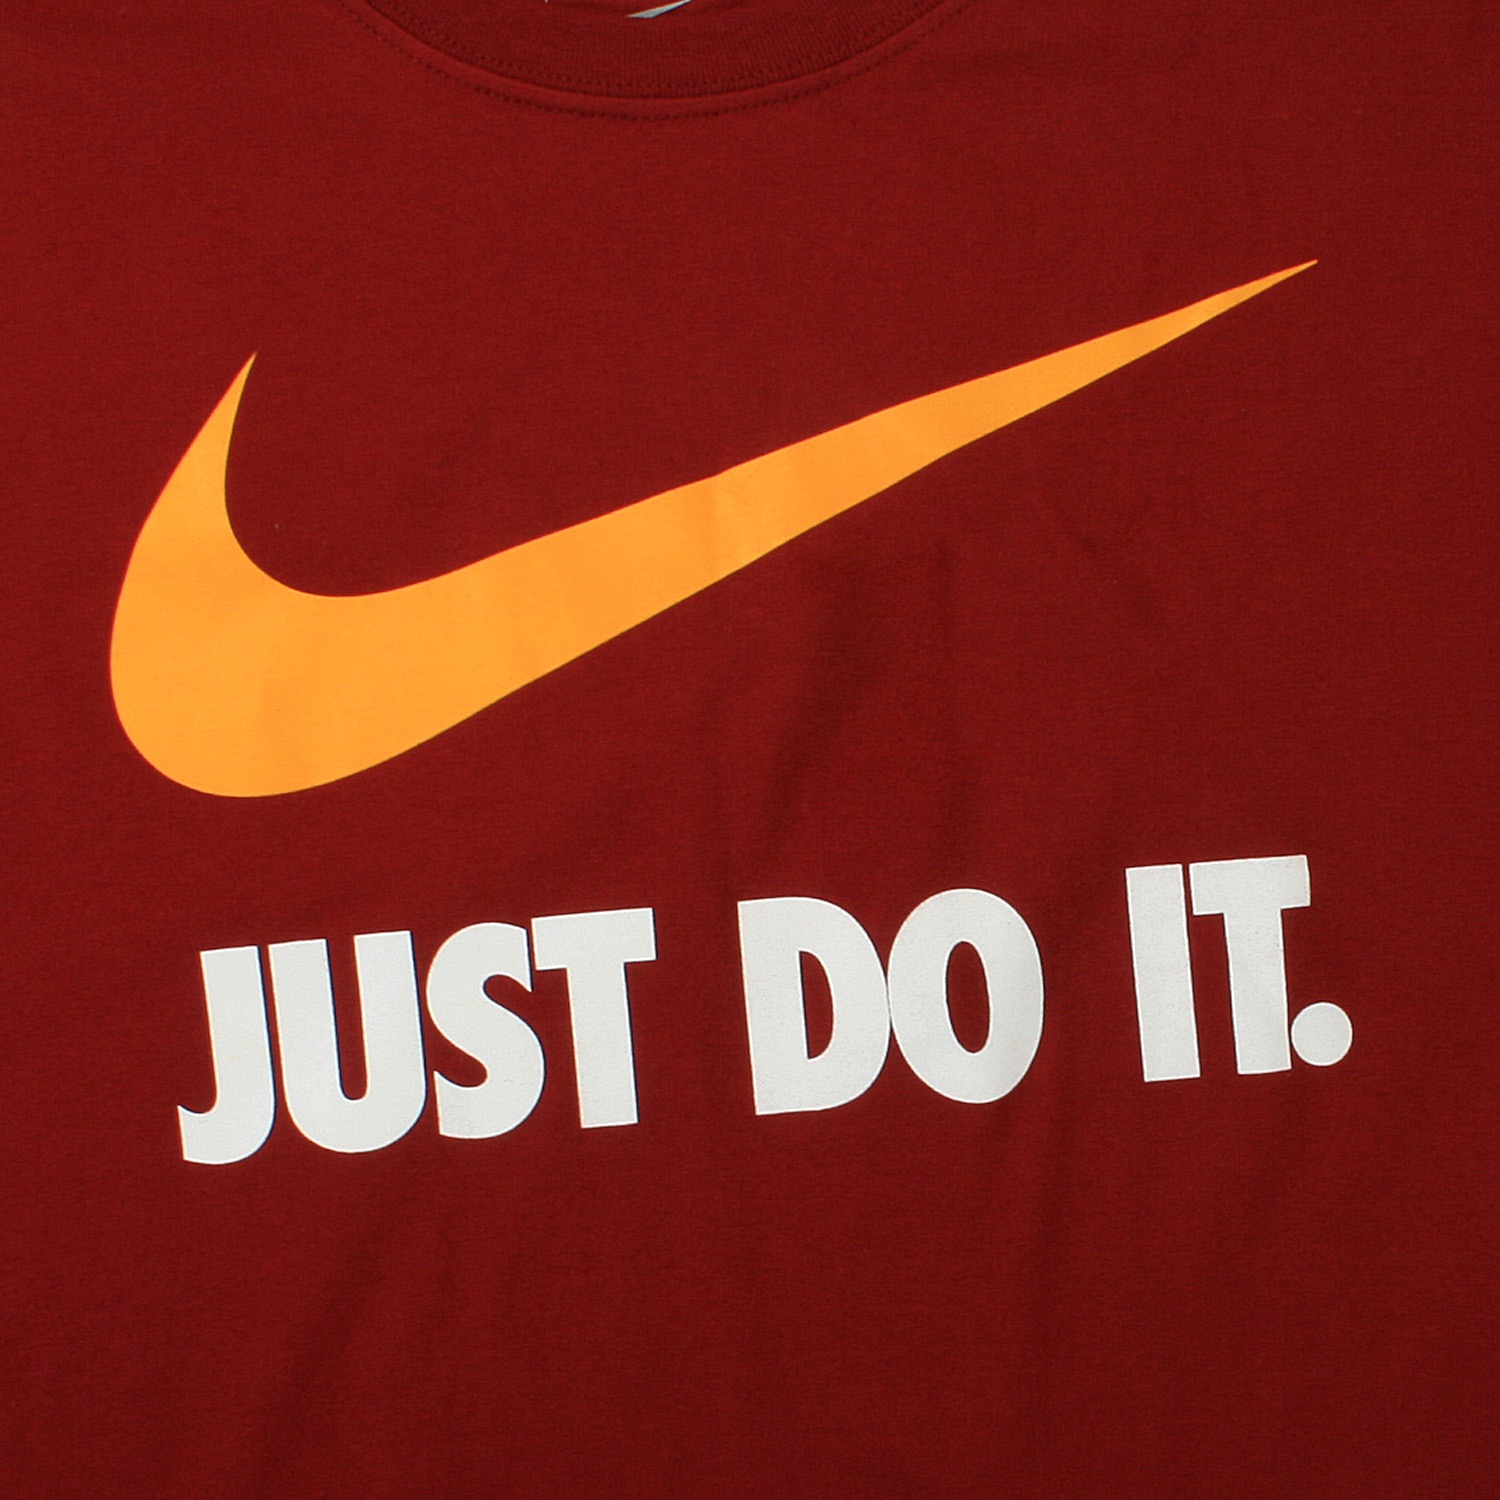 Just do it game. Слоган найк. Nike лозунг. Nike слоган компании. Слоган Nike just do it.